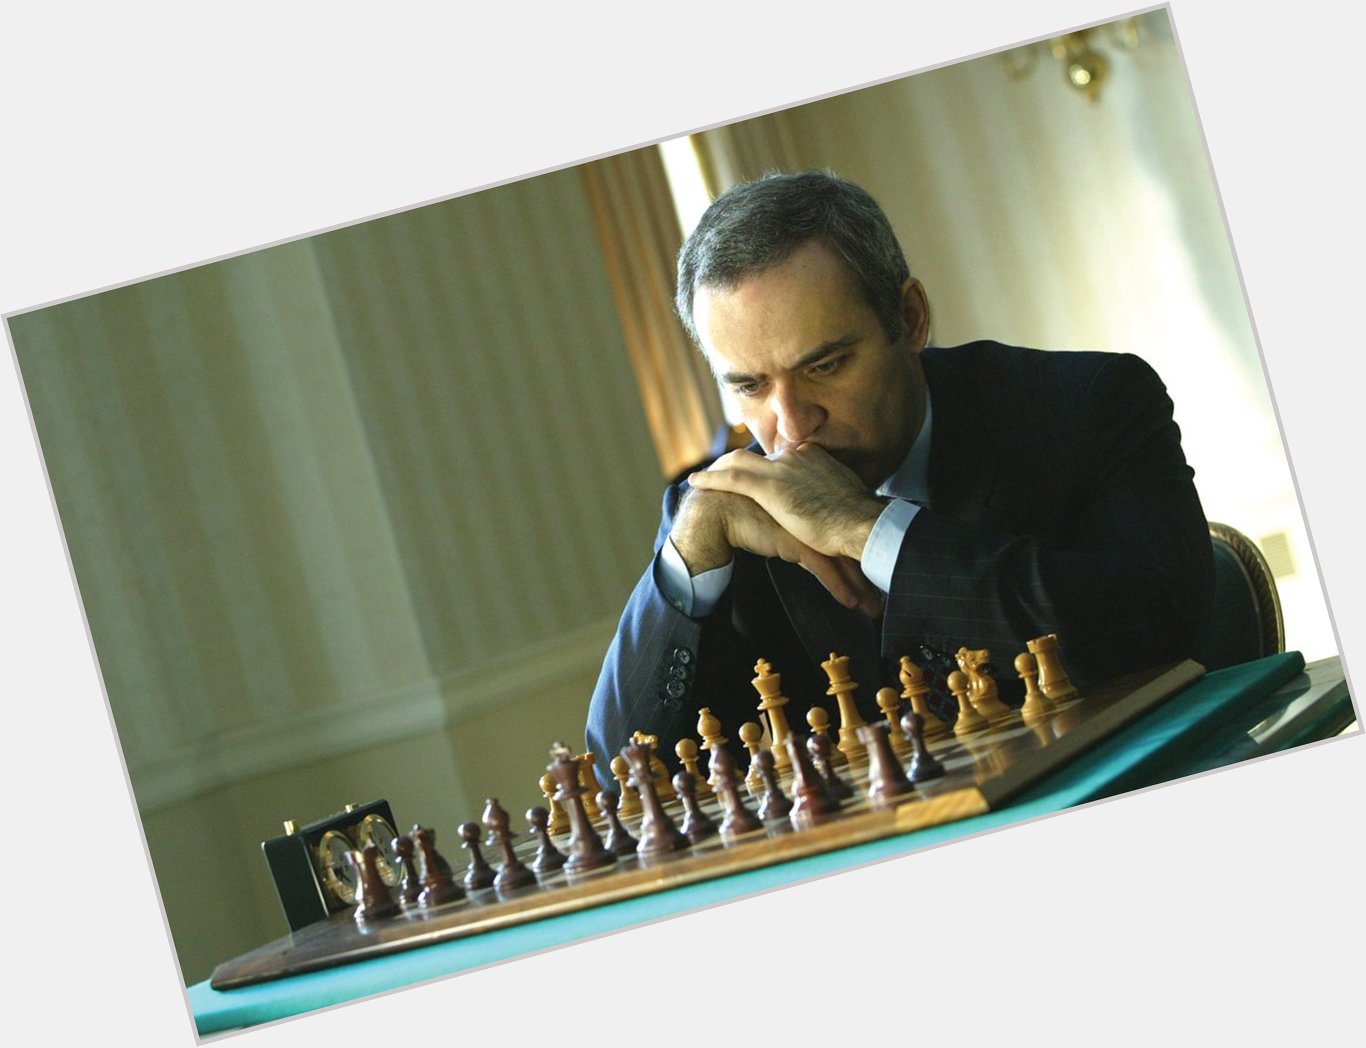 Happy birthday to the 13th world chess champion, the iconic Garry Kasparov. 